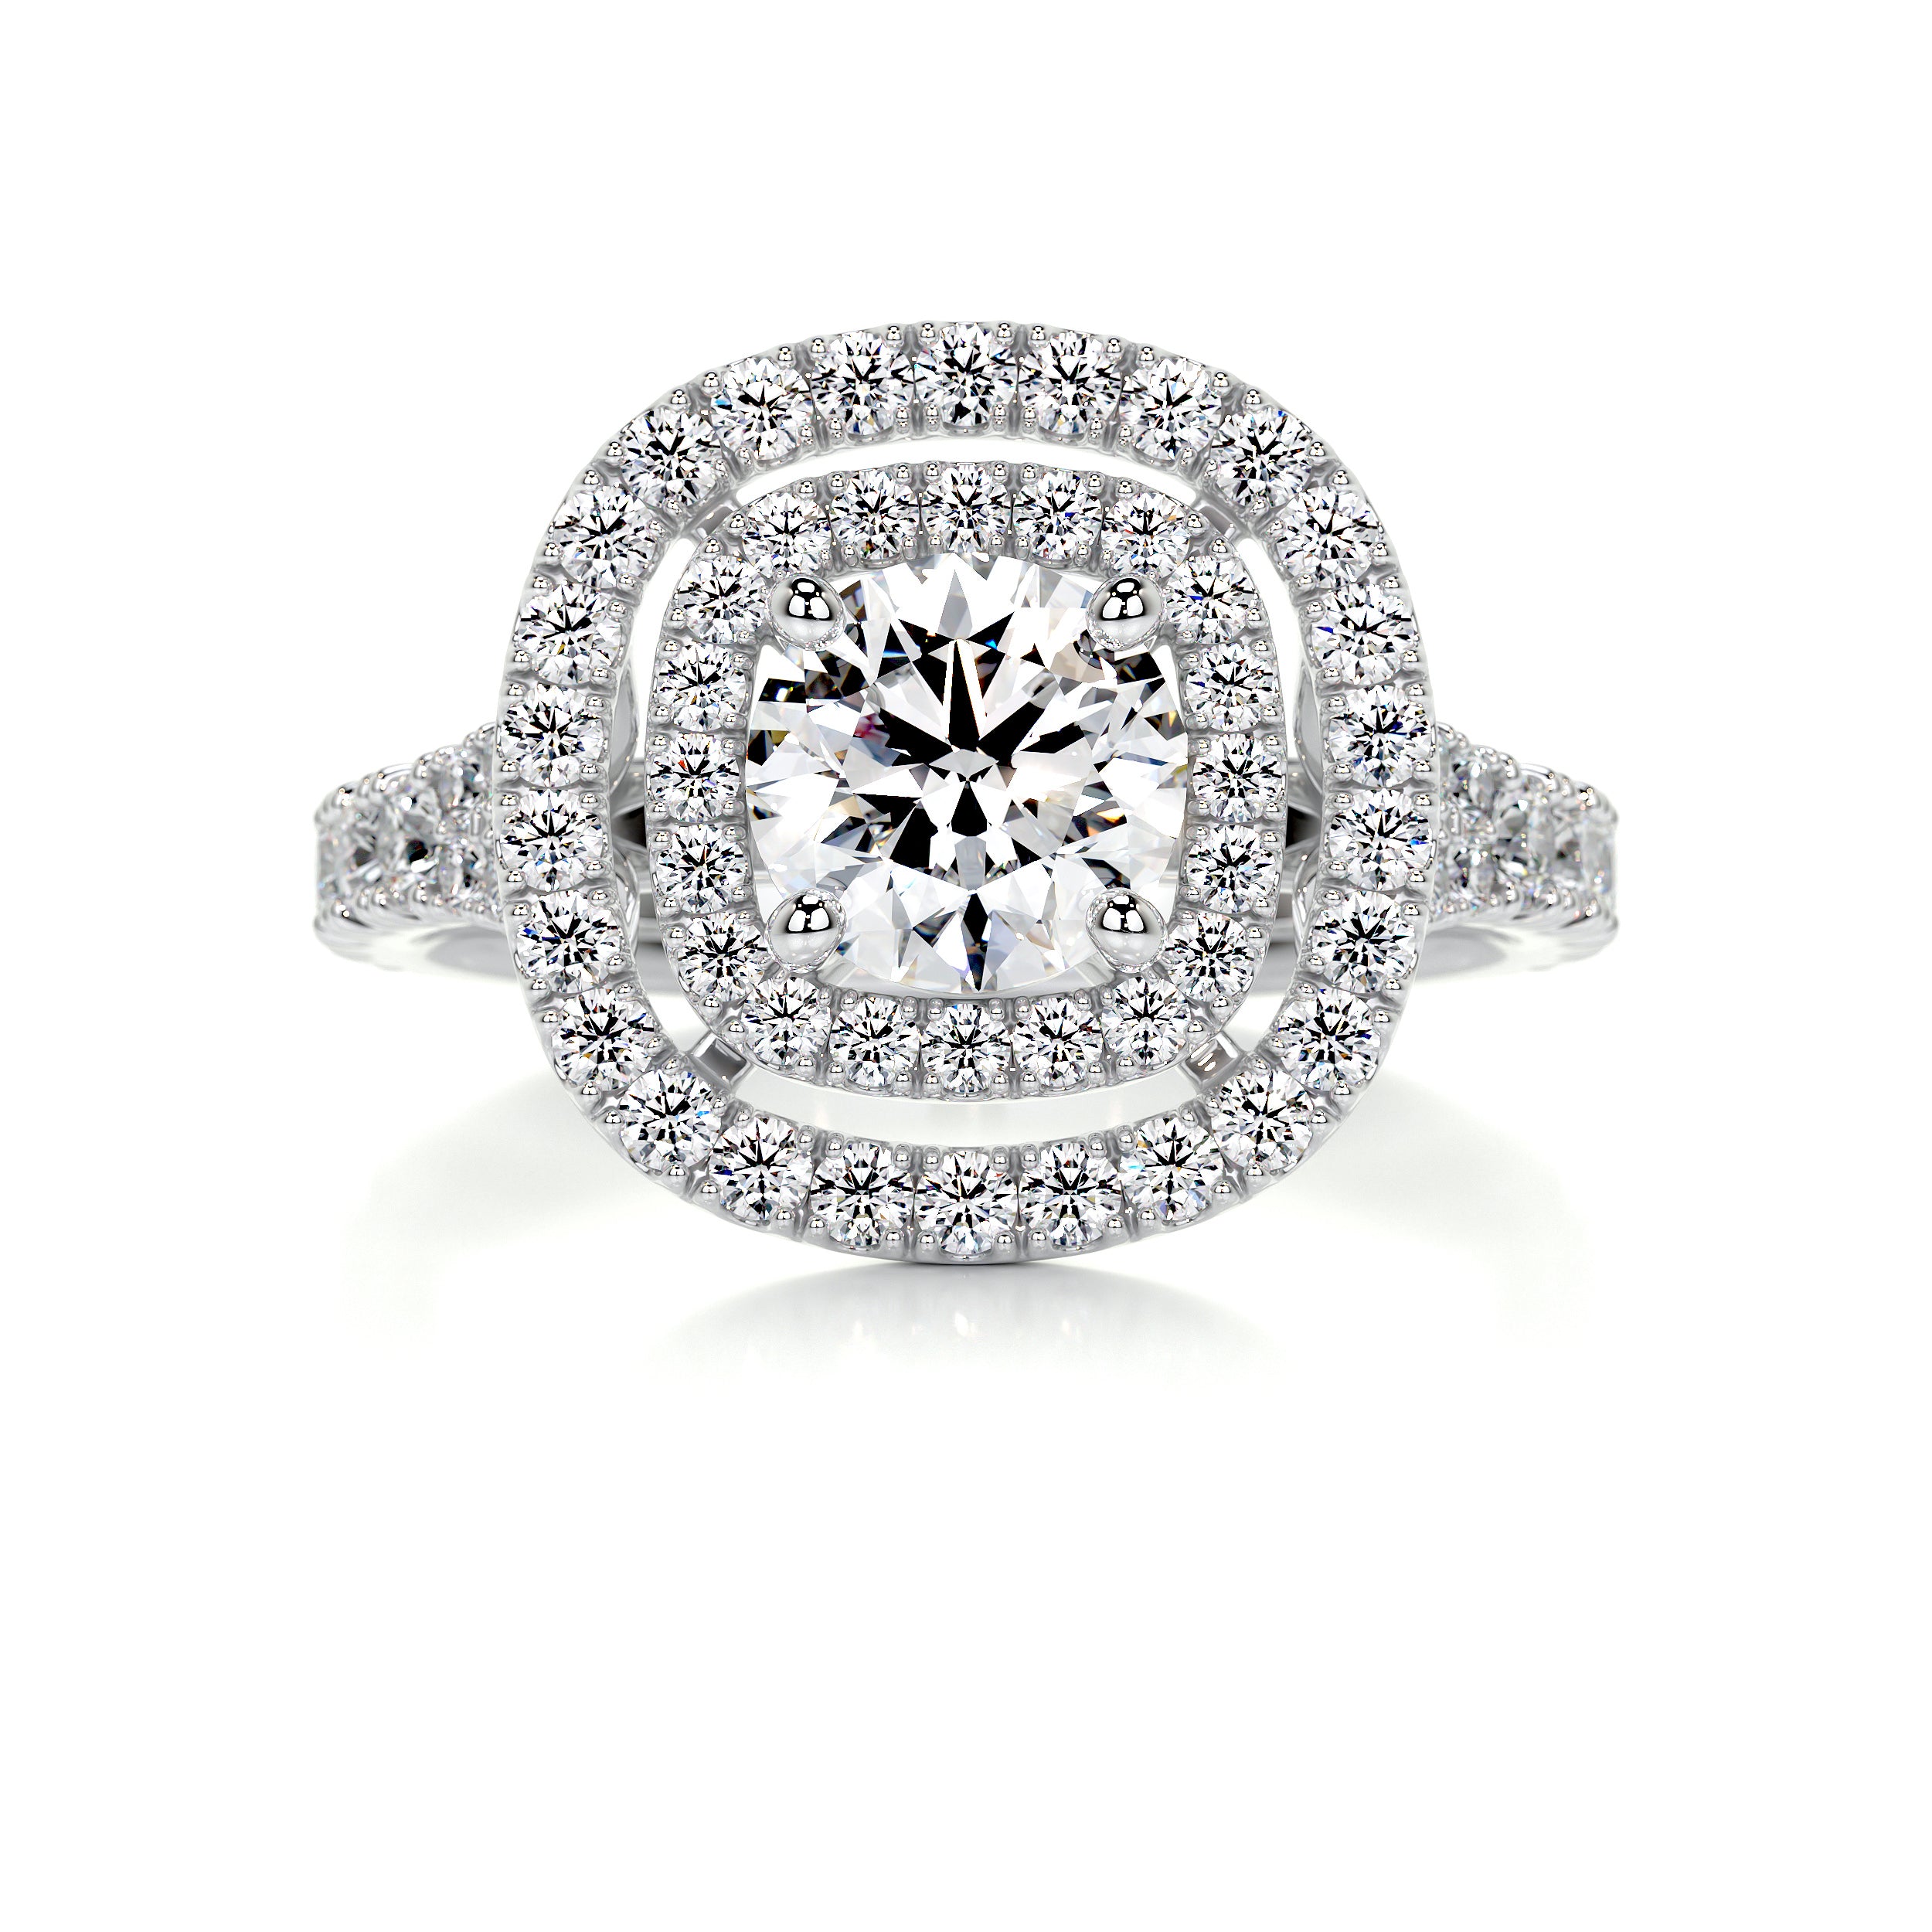 Natalie Diamond Engagement Ring   (2.2 Carat) -14K White Gold